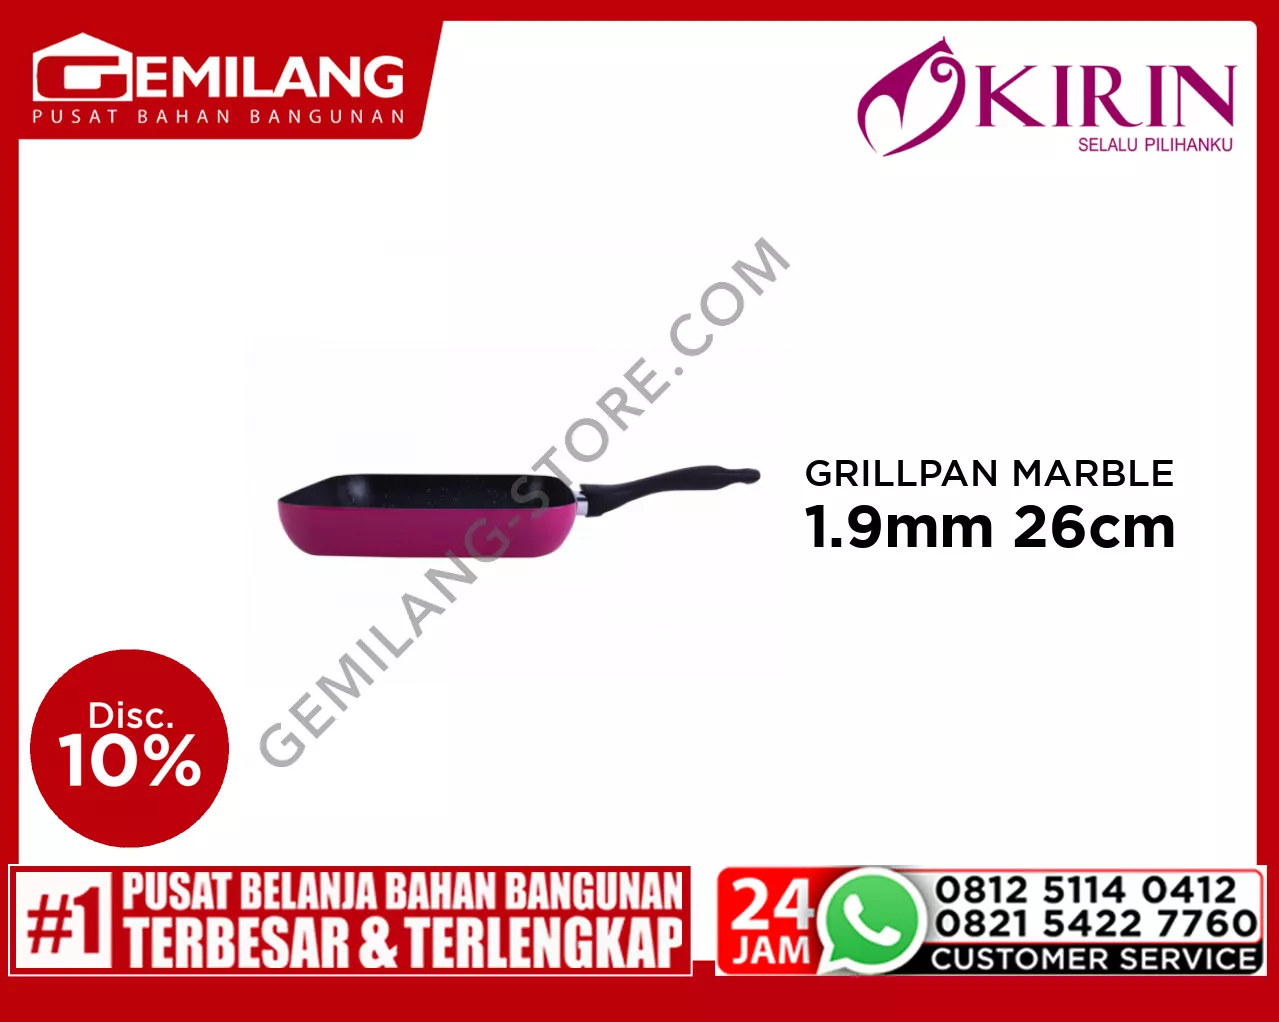 KIRIN LADOLADO GRILL PAN MARBLE 1.9mm 26cm